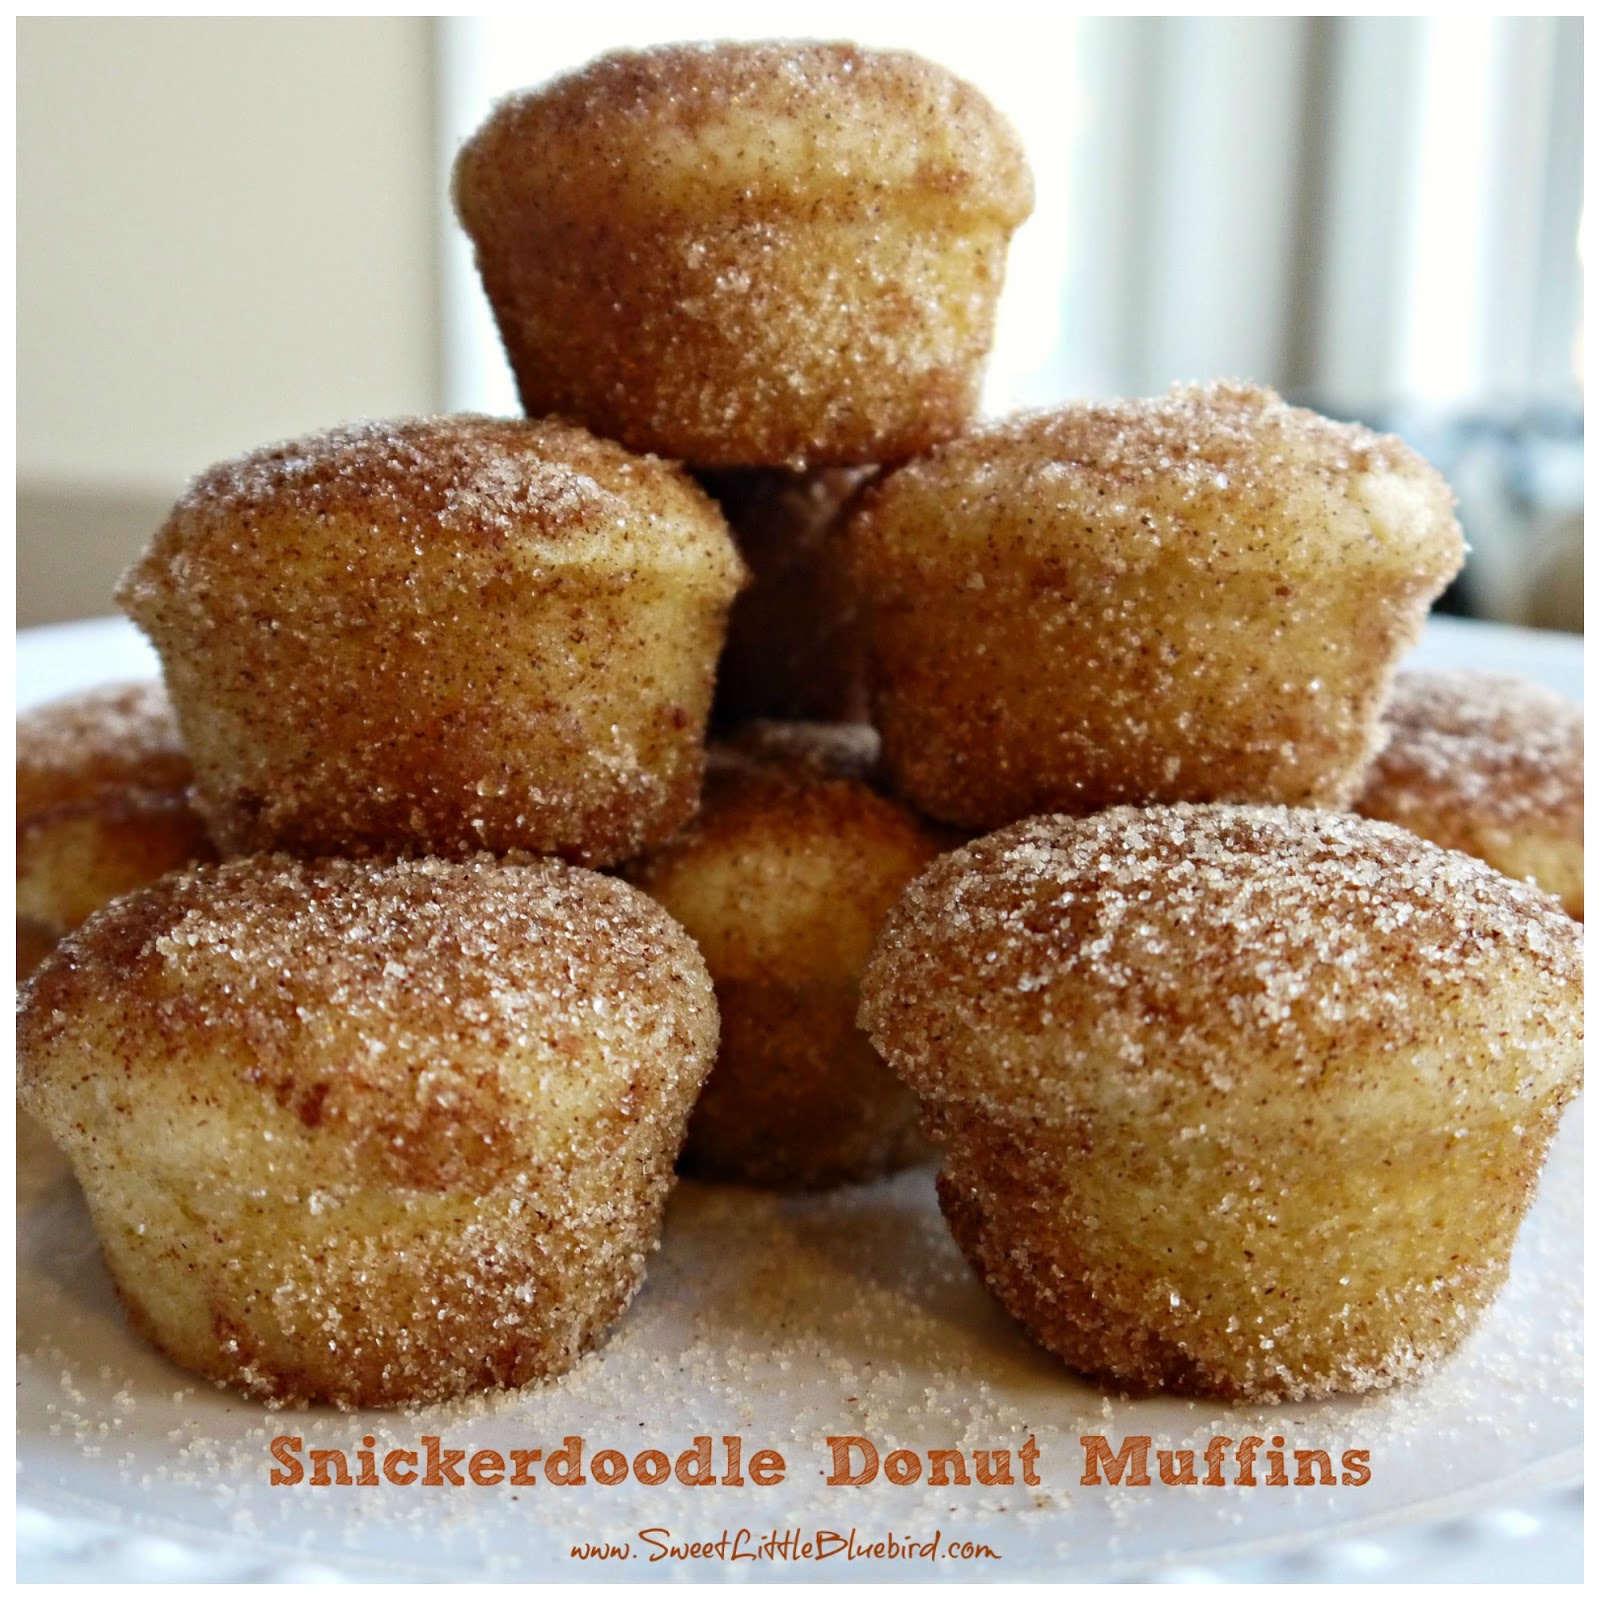 Sweet Little Bluebird: Snickerdoodle Donut Muffins